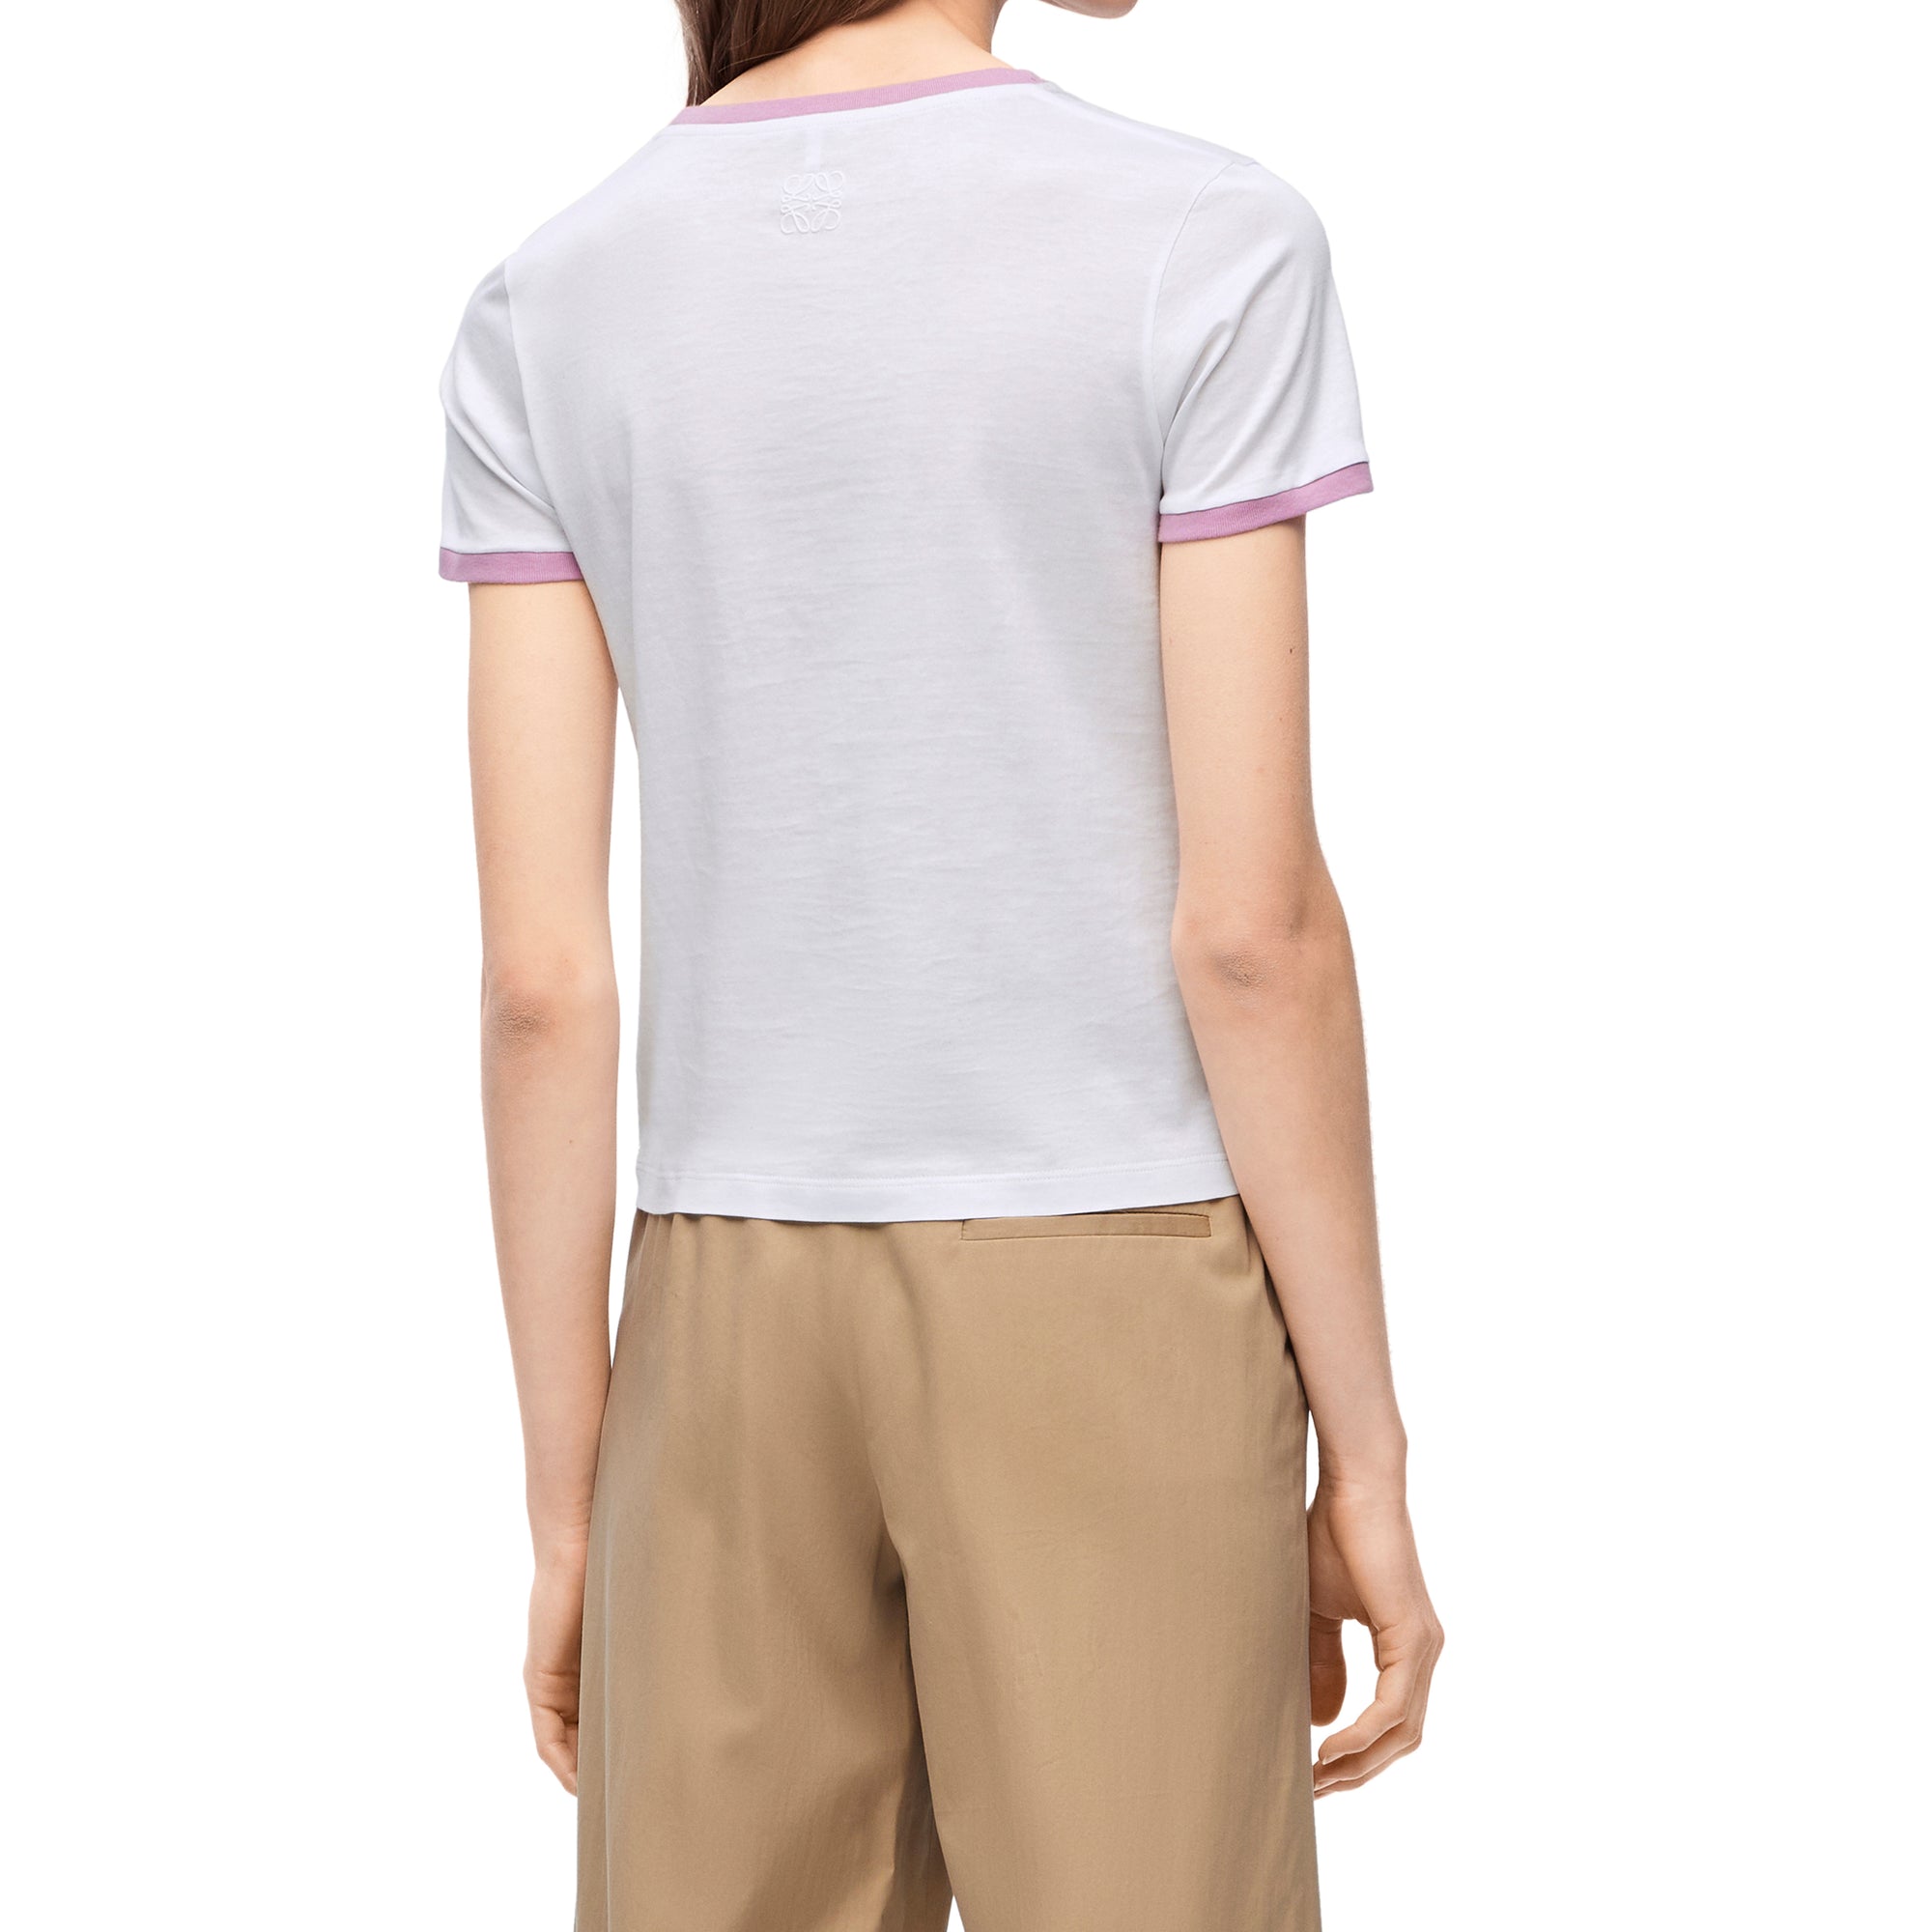 Loewe - Women’s Slim Fit T-Shirt - (White/Multicolour) view 4